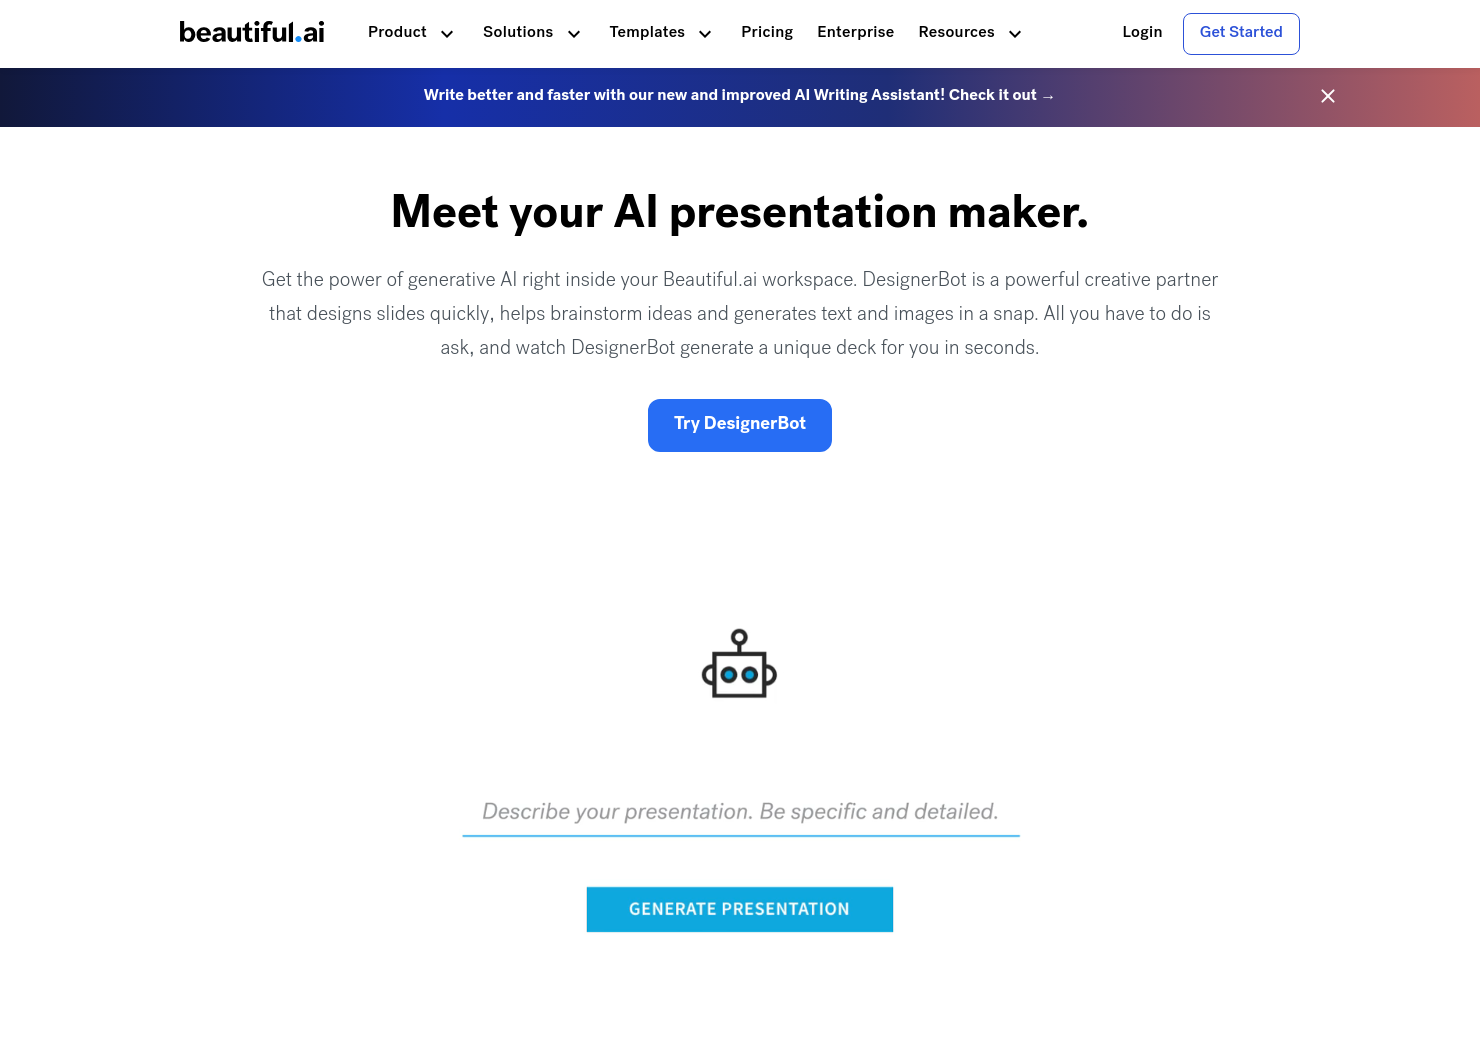 startuptile DesignerBot 2.0 by Beautiful.ai-Create presentations 10x faster with Generative AI